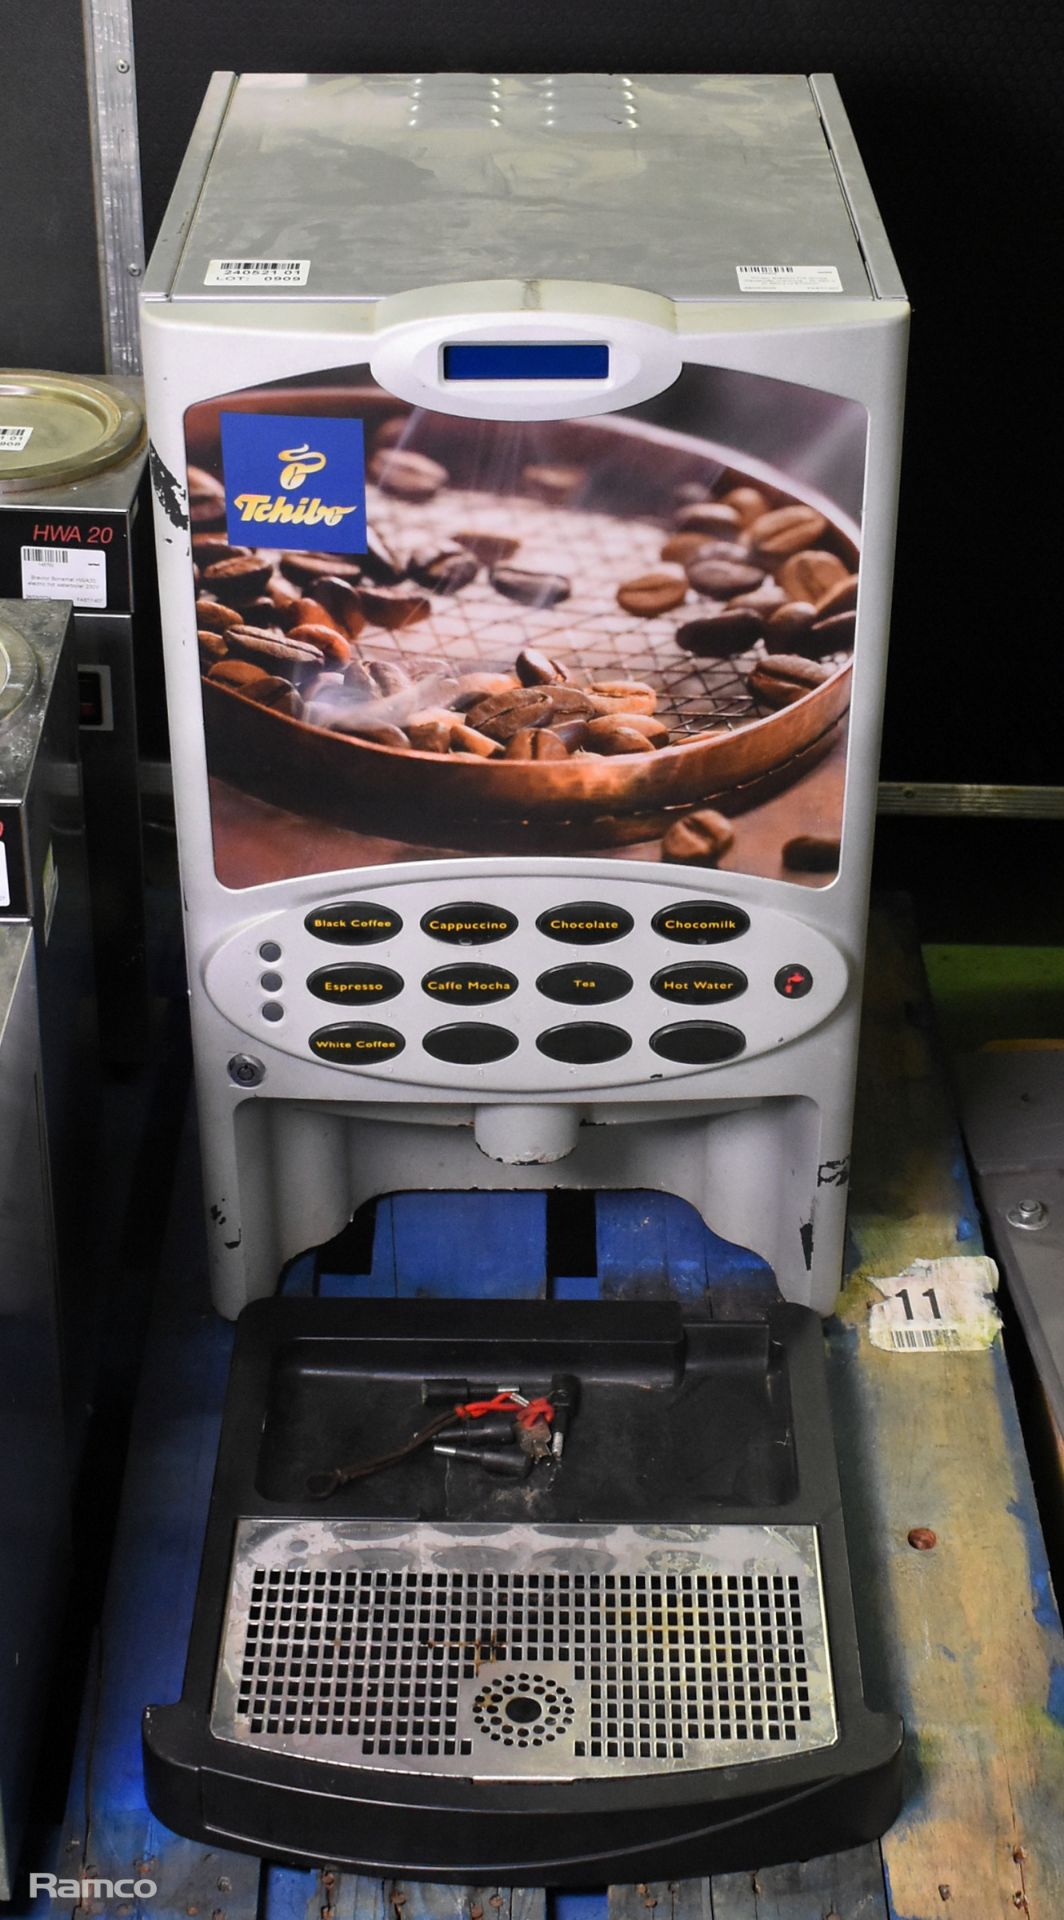 Tchibo Electric hot drinks dispenser machine - W 380 x D 460 x H 670mm